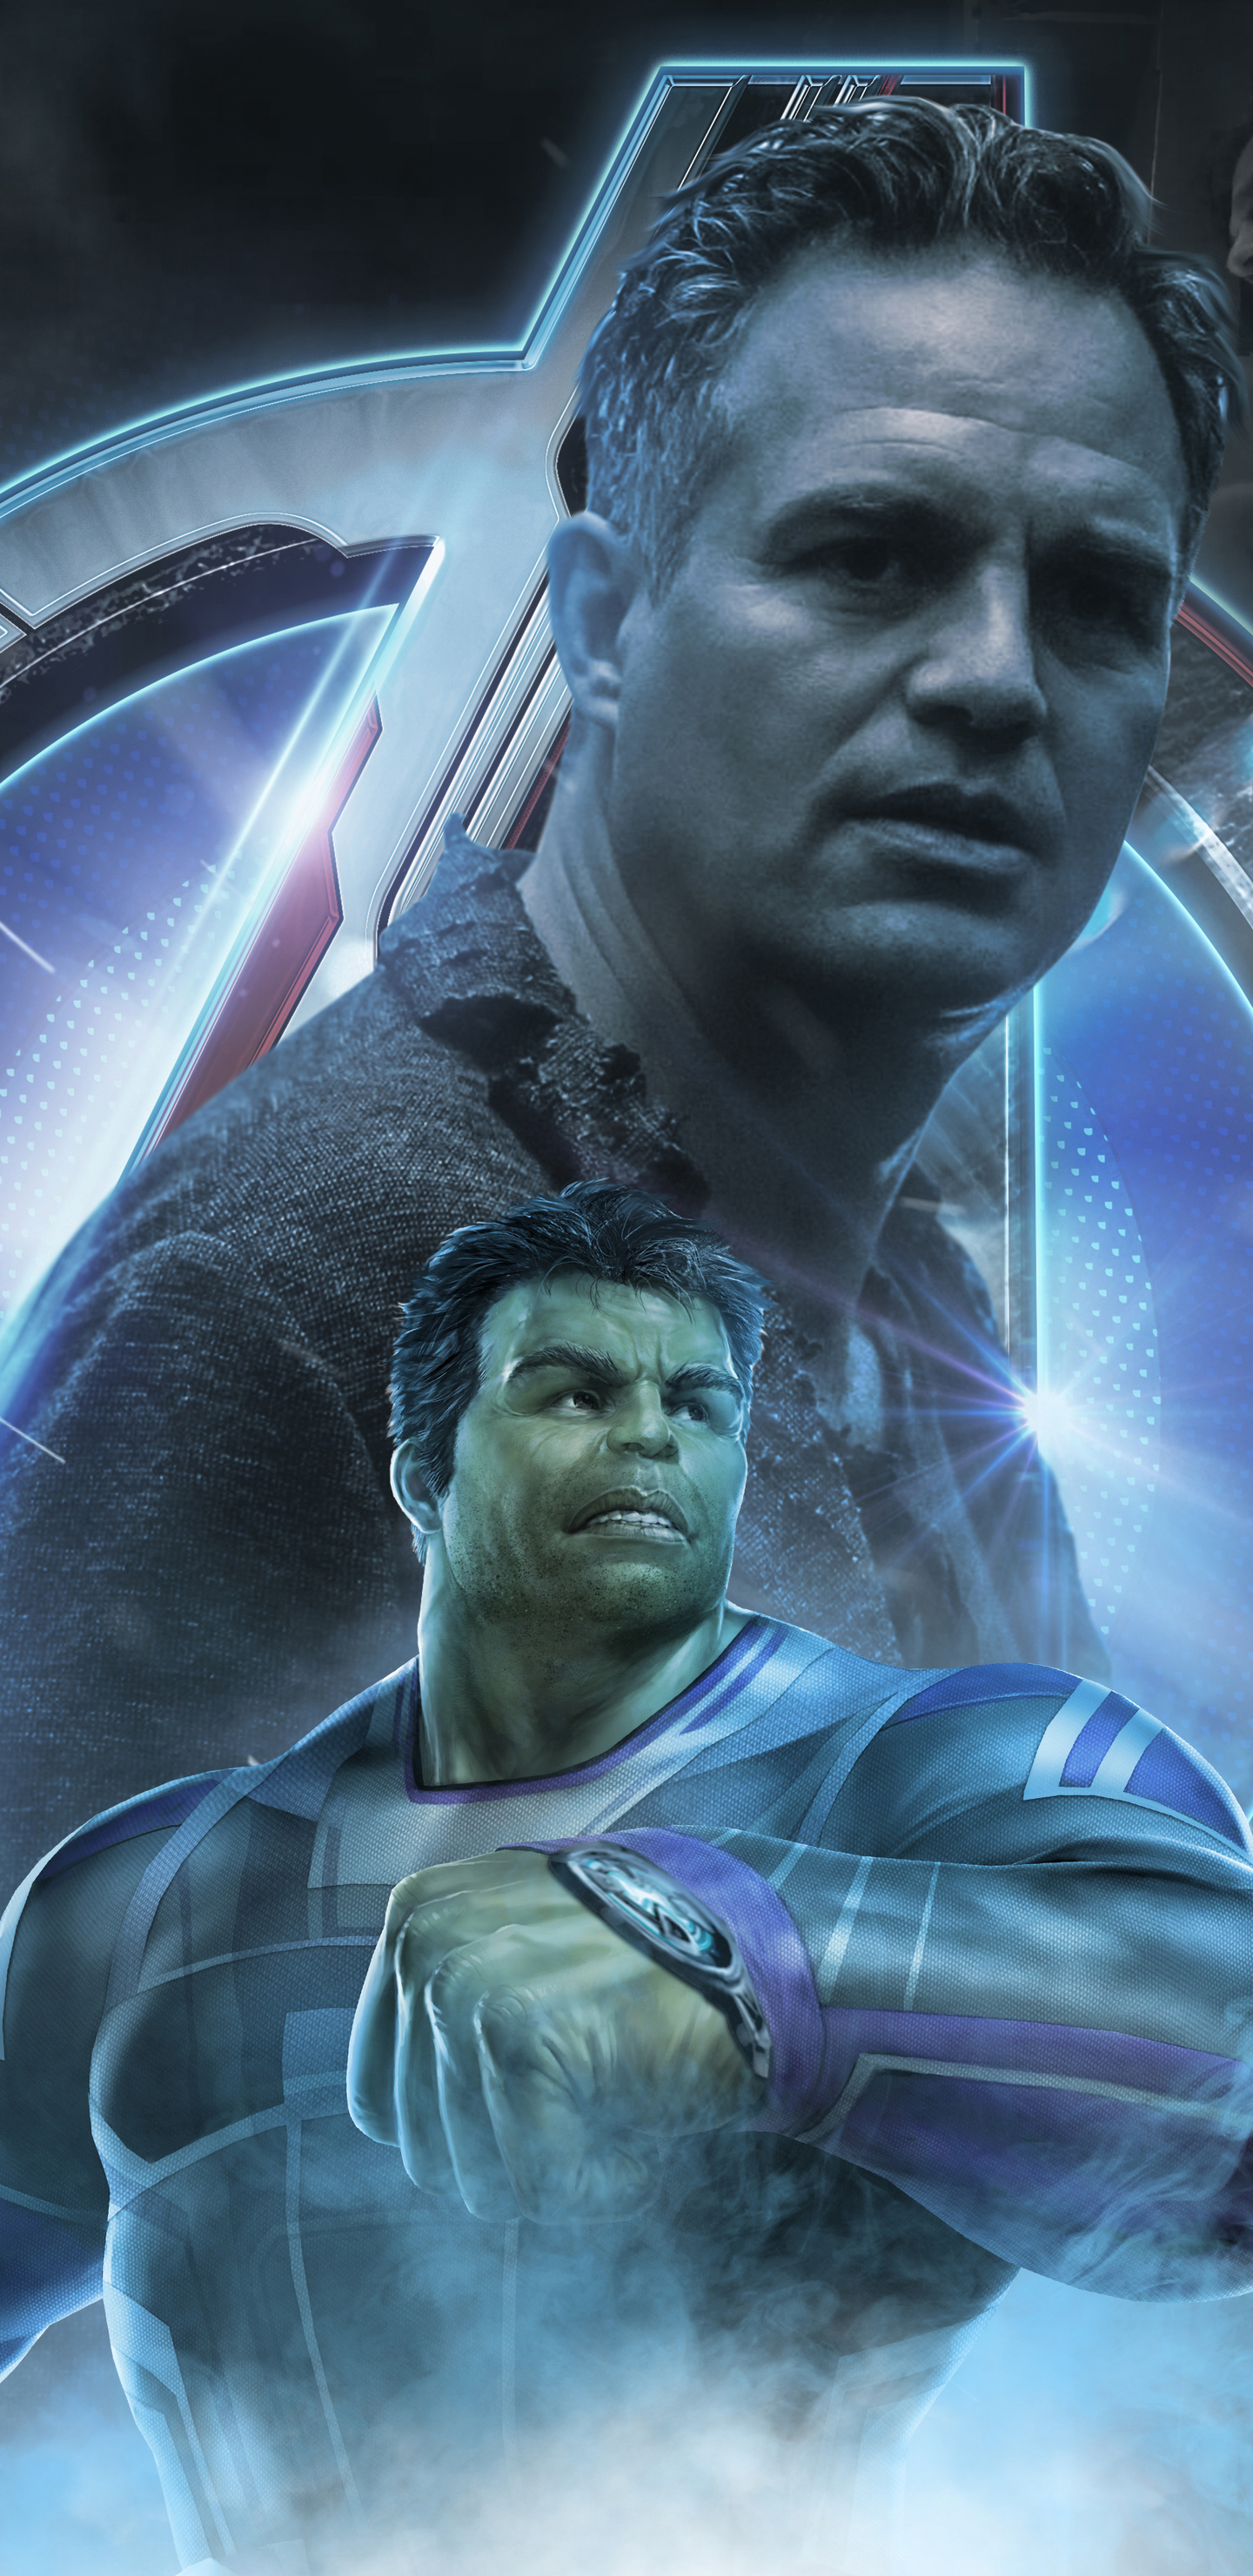 Hulk In Avengers Endgame 2019 Samsung Galaxy Note S9